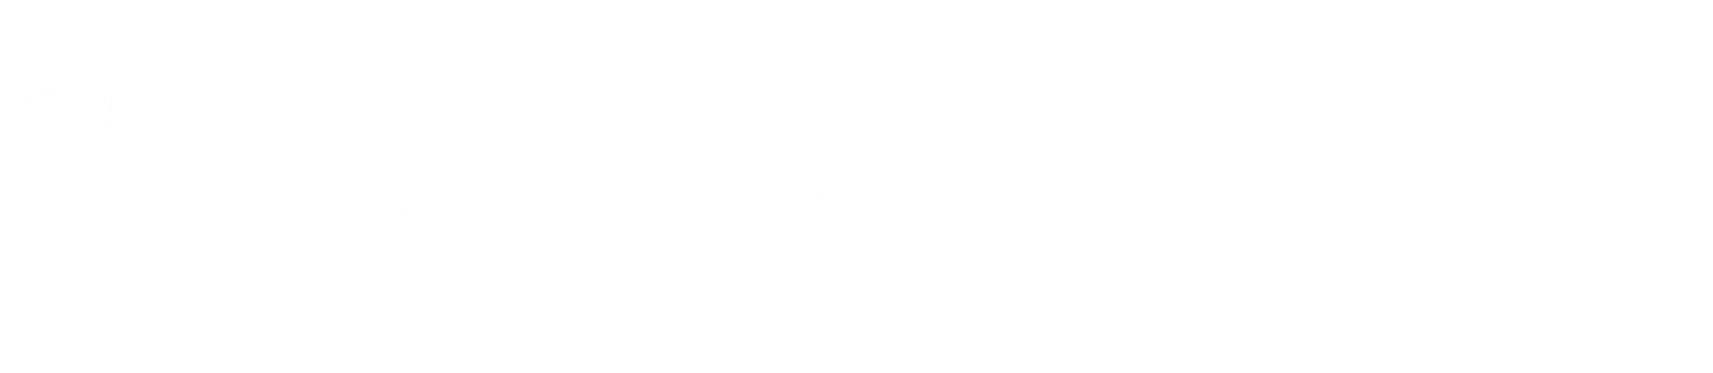 Starman Cybersecurity community logo